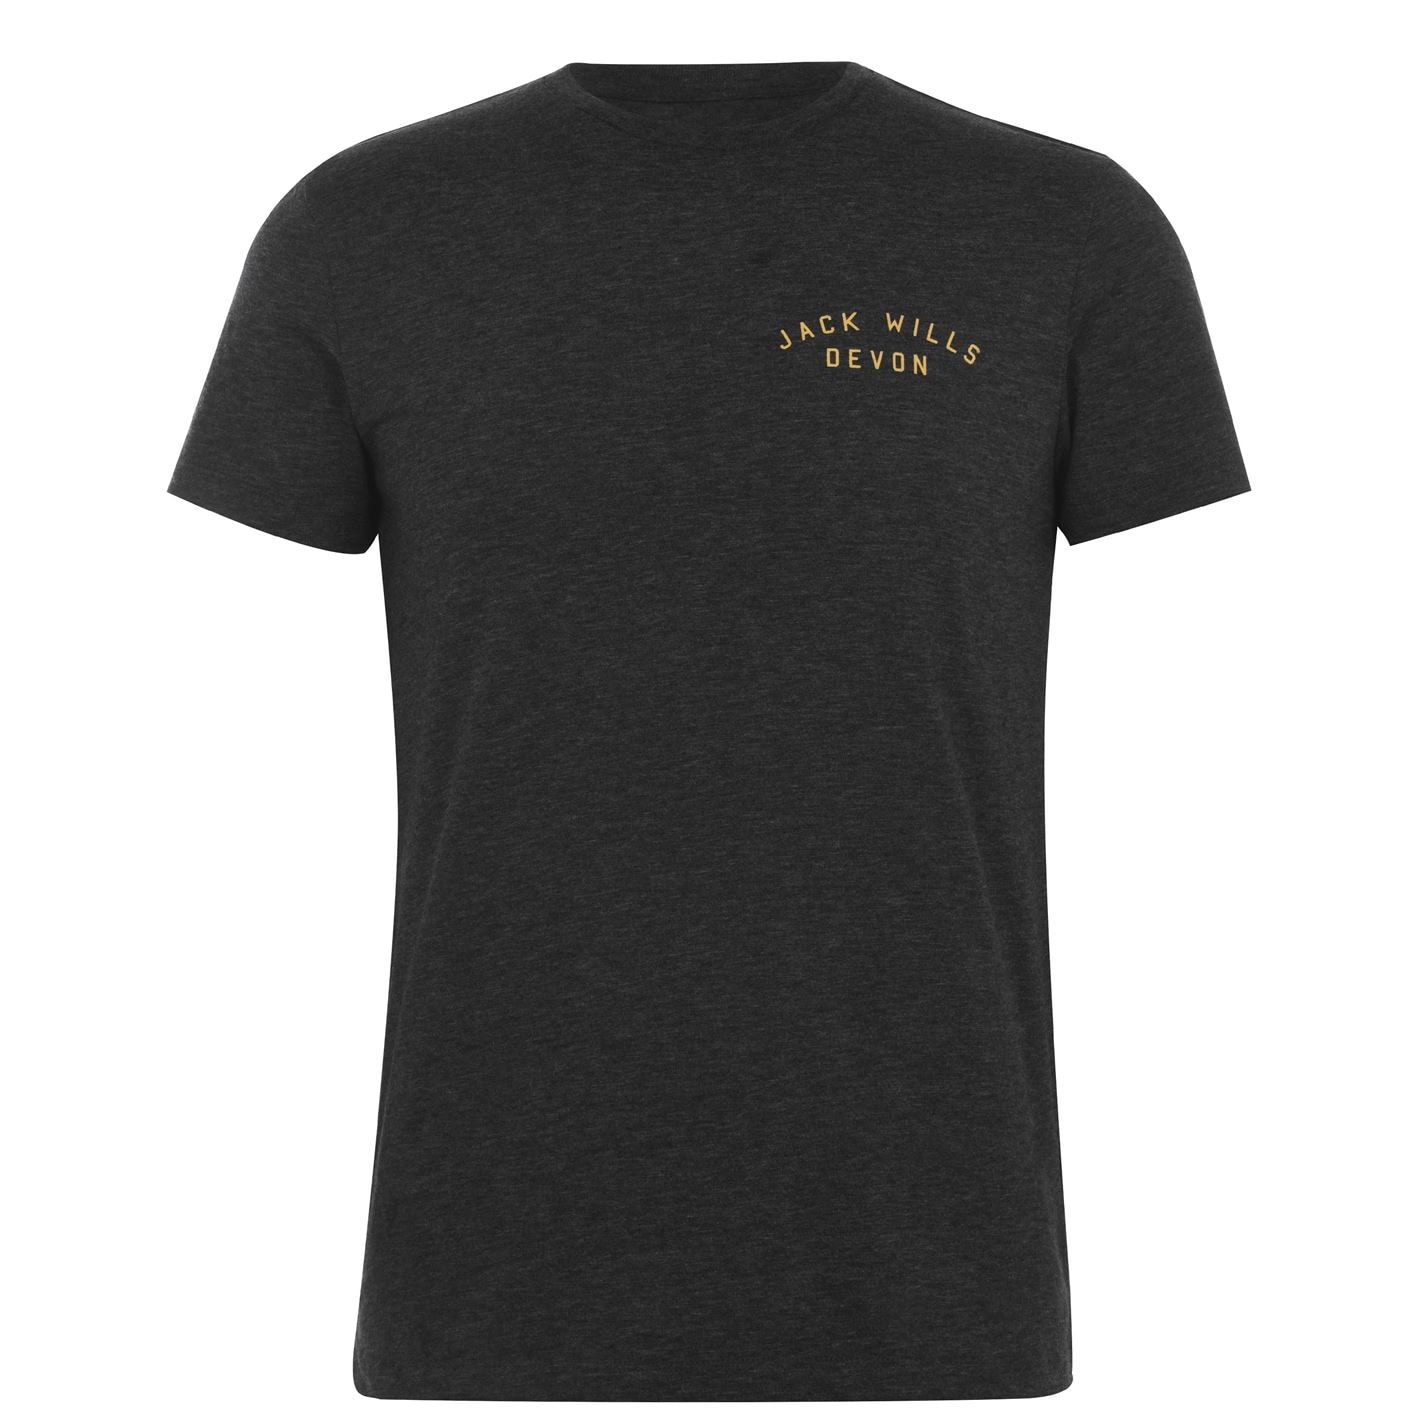 T-shirt Da Uomo Jack Wills Underwood